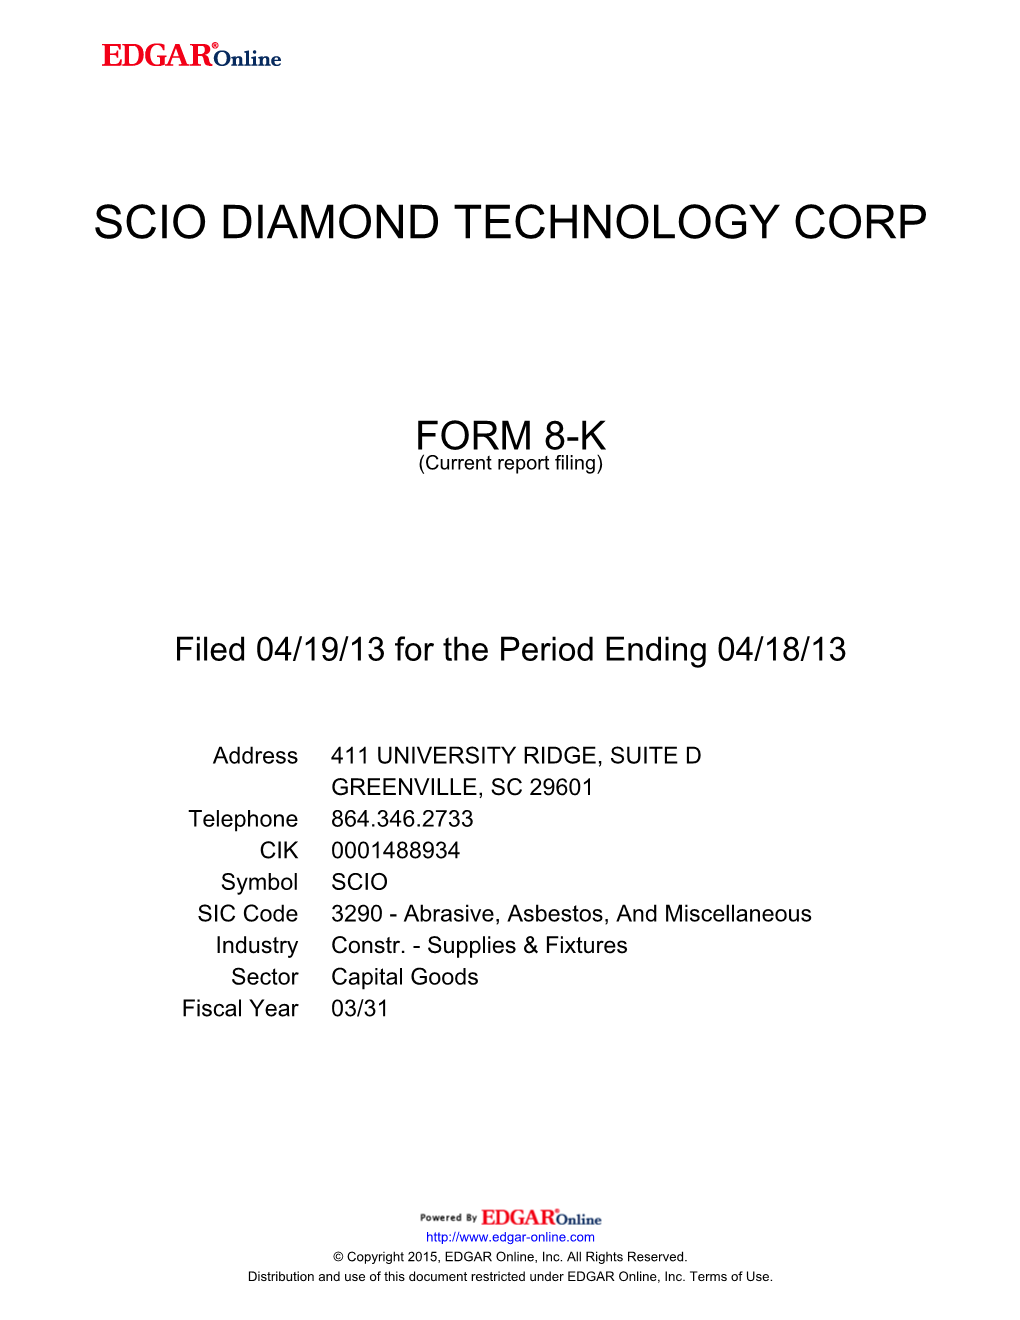 Scio Diamond Technology Corp